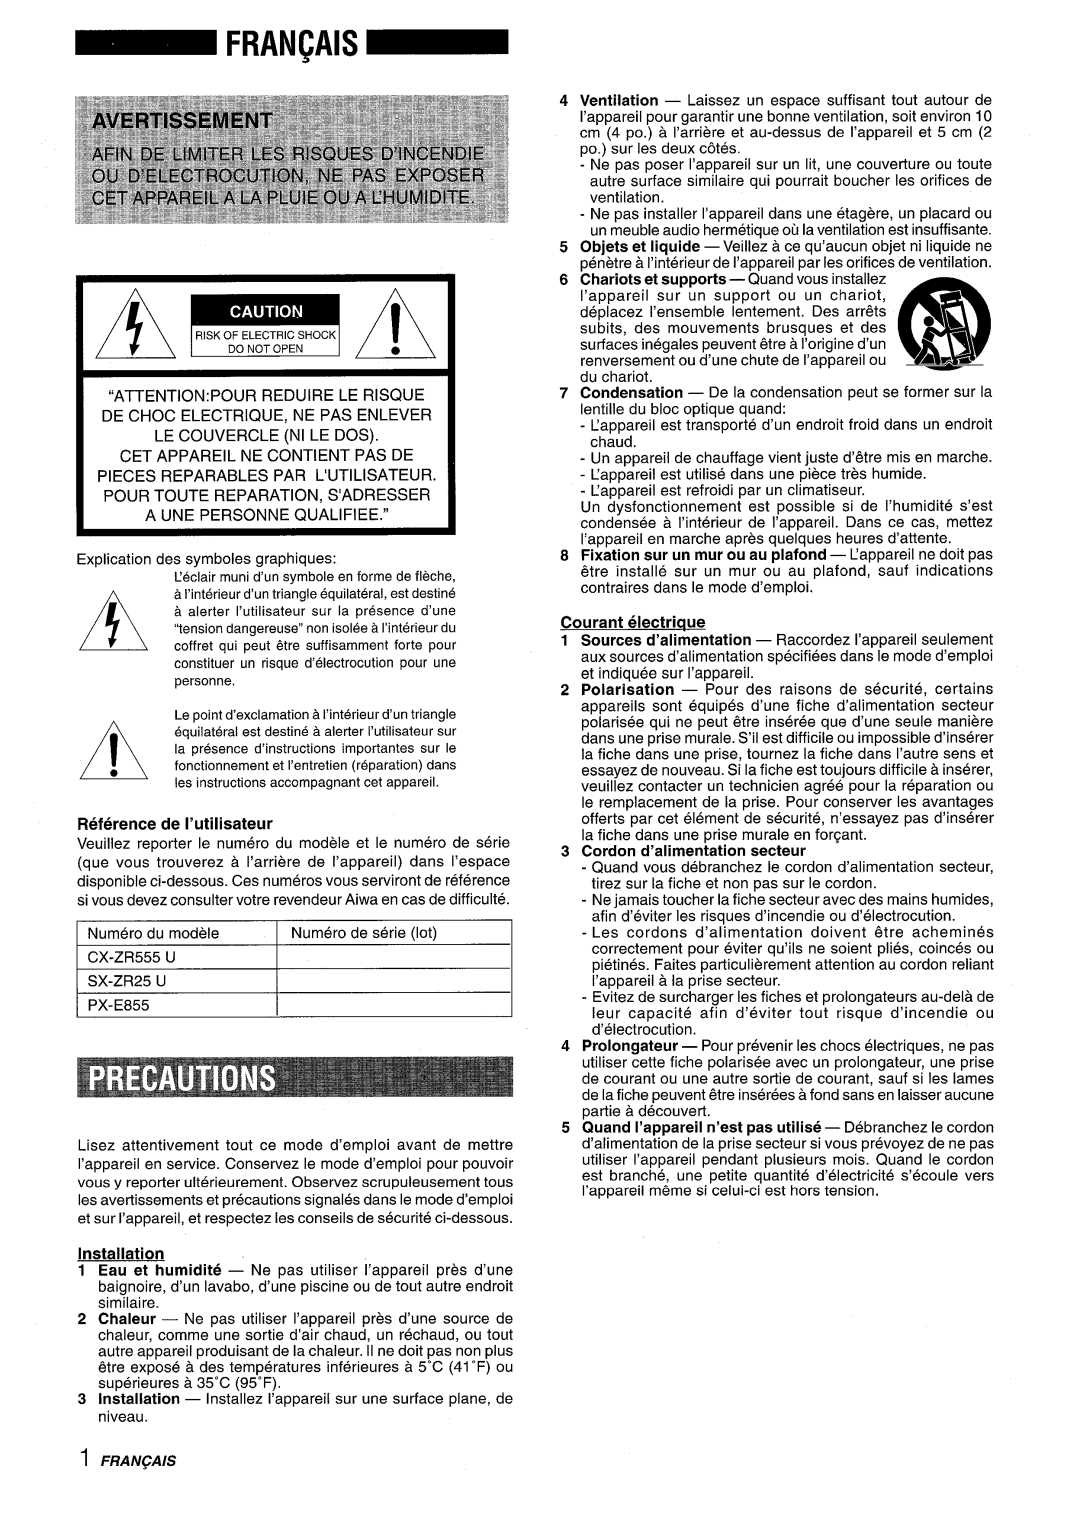 Aiwa Z-R555 manual LE COUVERCLE N1 LE DOS 